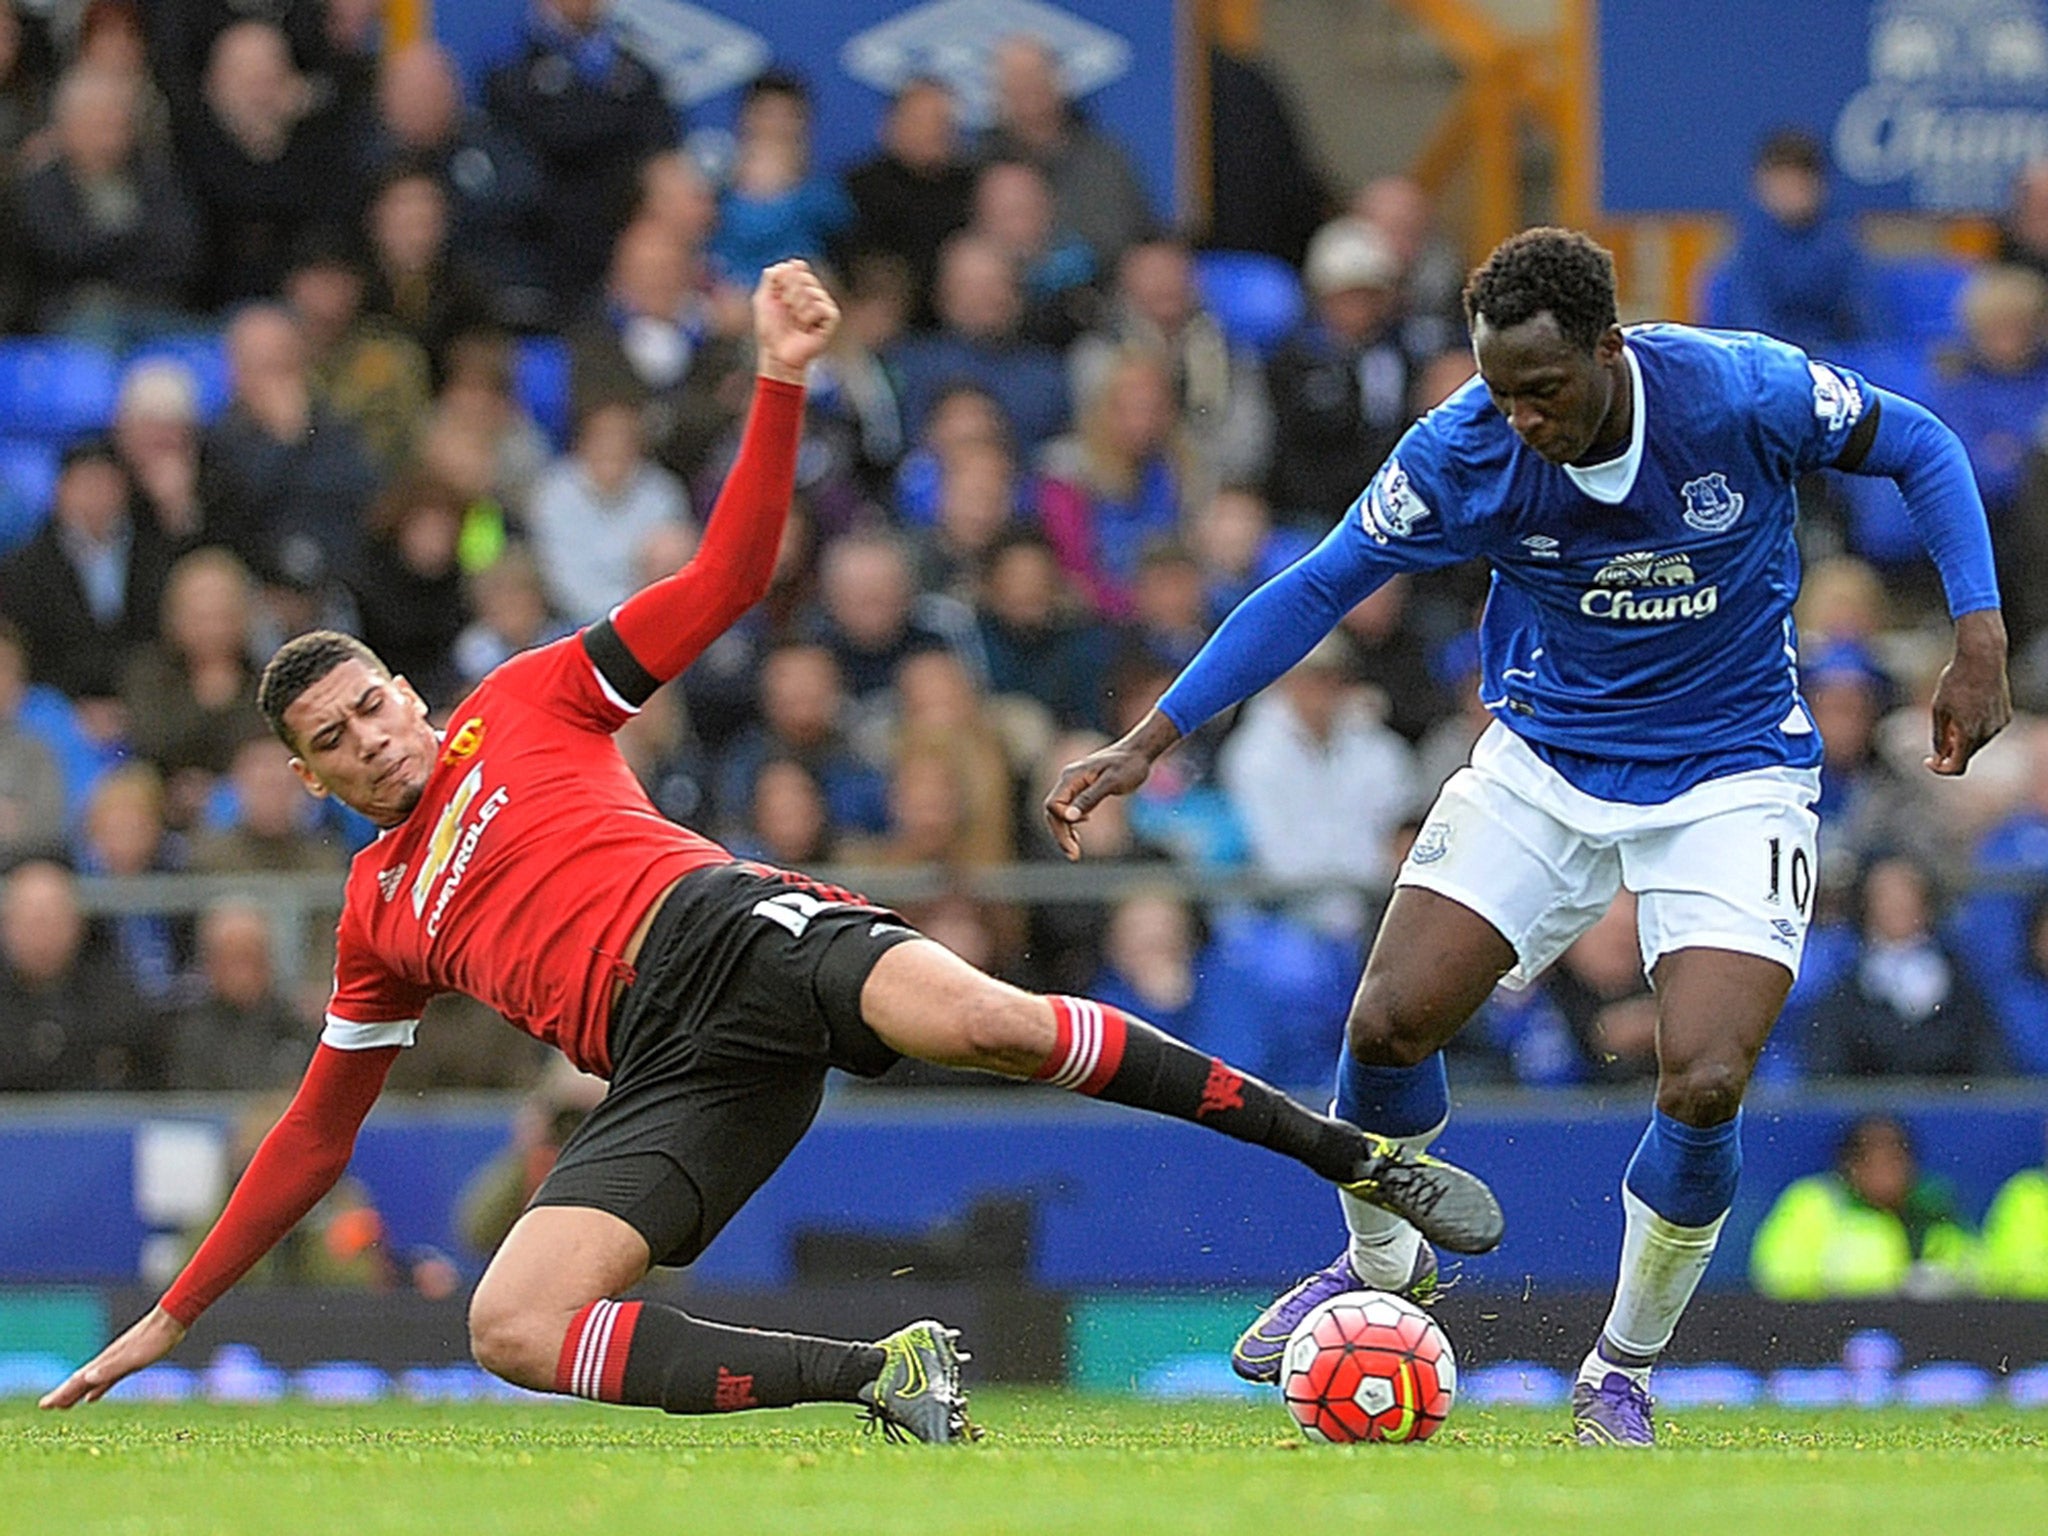 Manchester United defender Chris Smalling challenges Everton's Romelu Lukaku